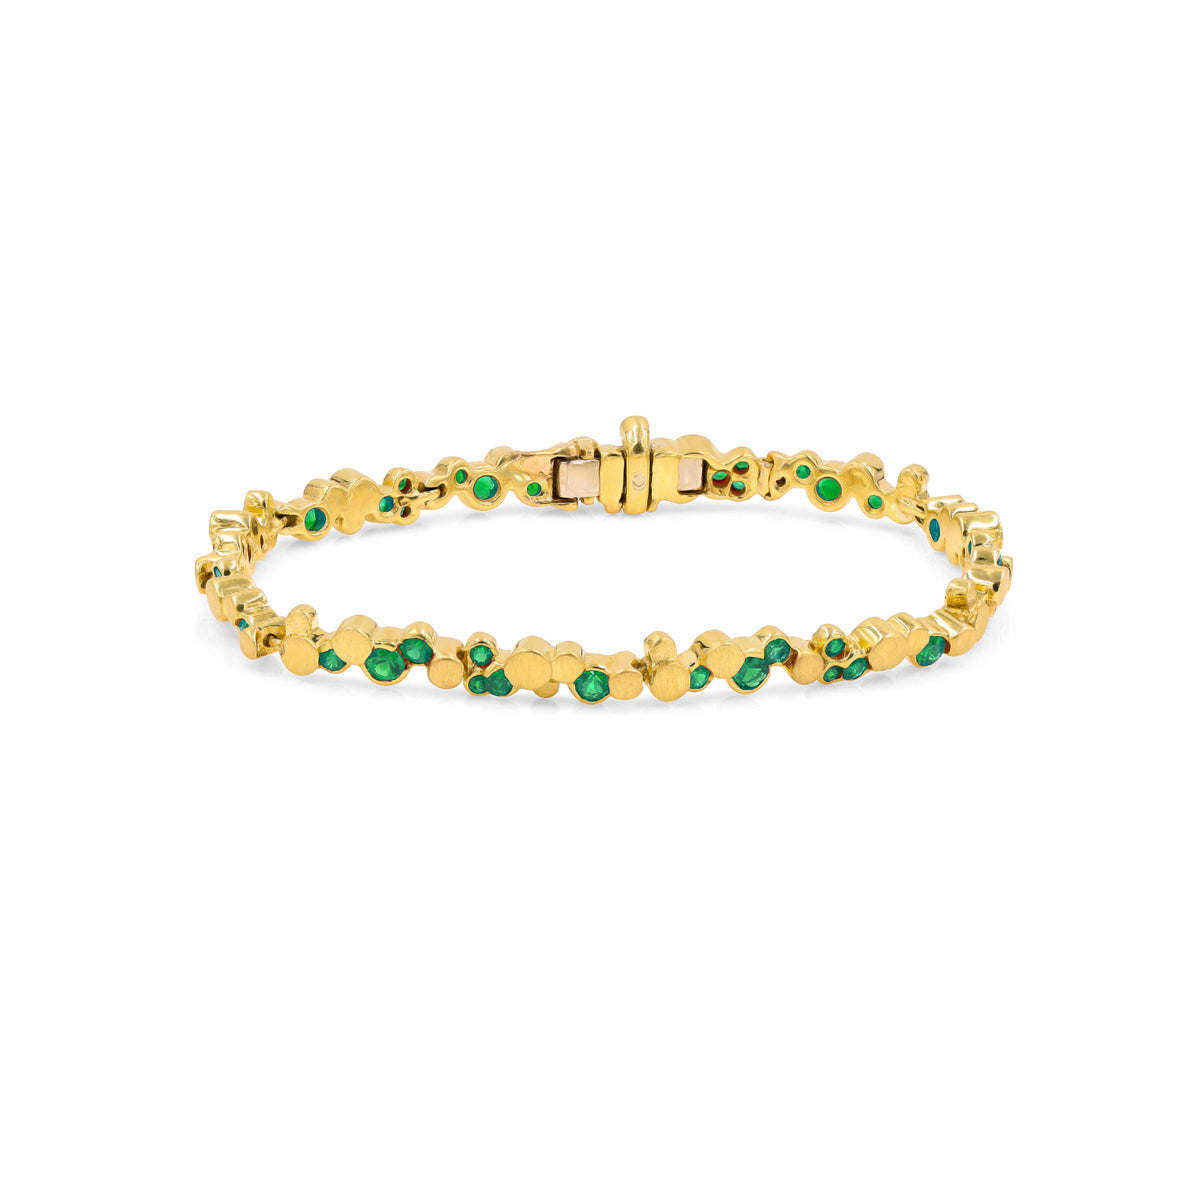 Gold and emerald handmade bracelet by chicago jeweler, Lester Lampert.